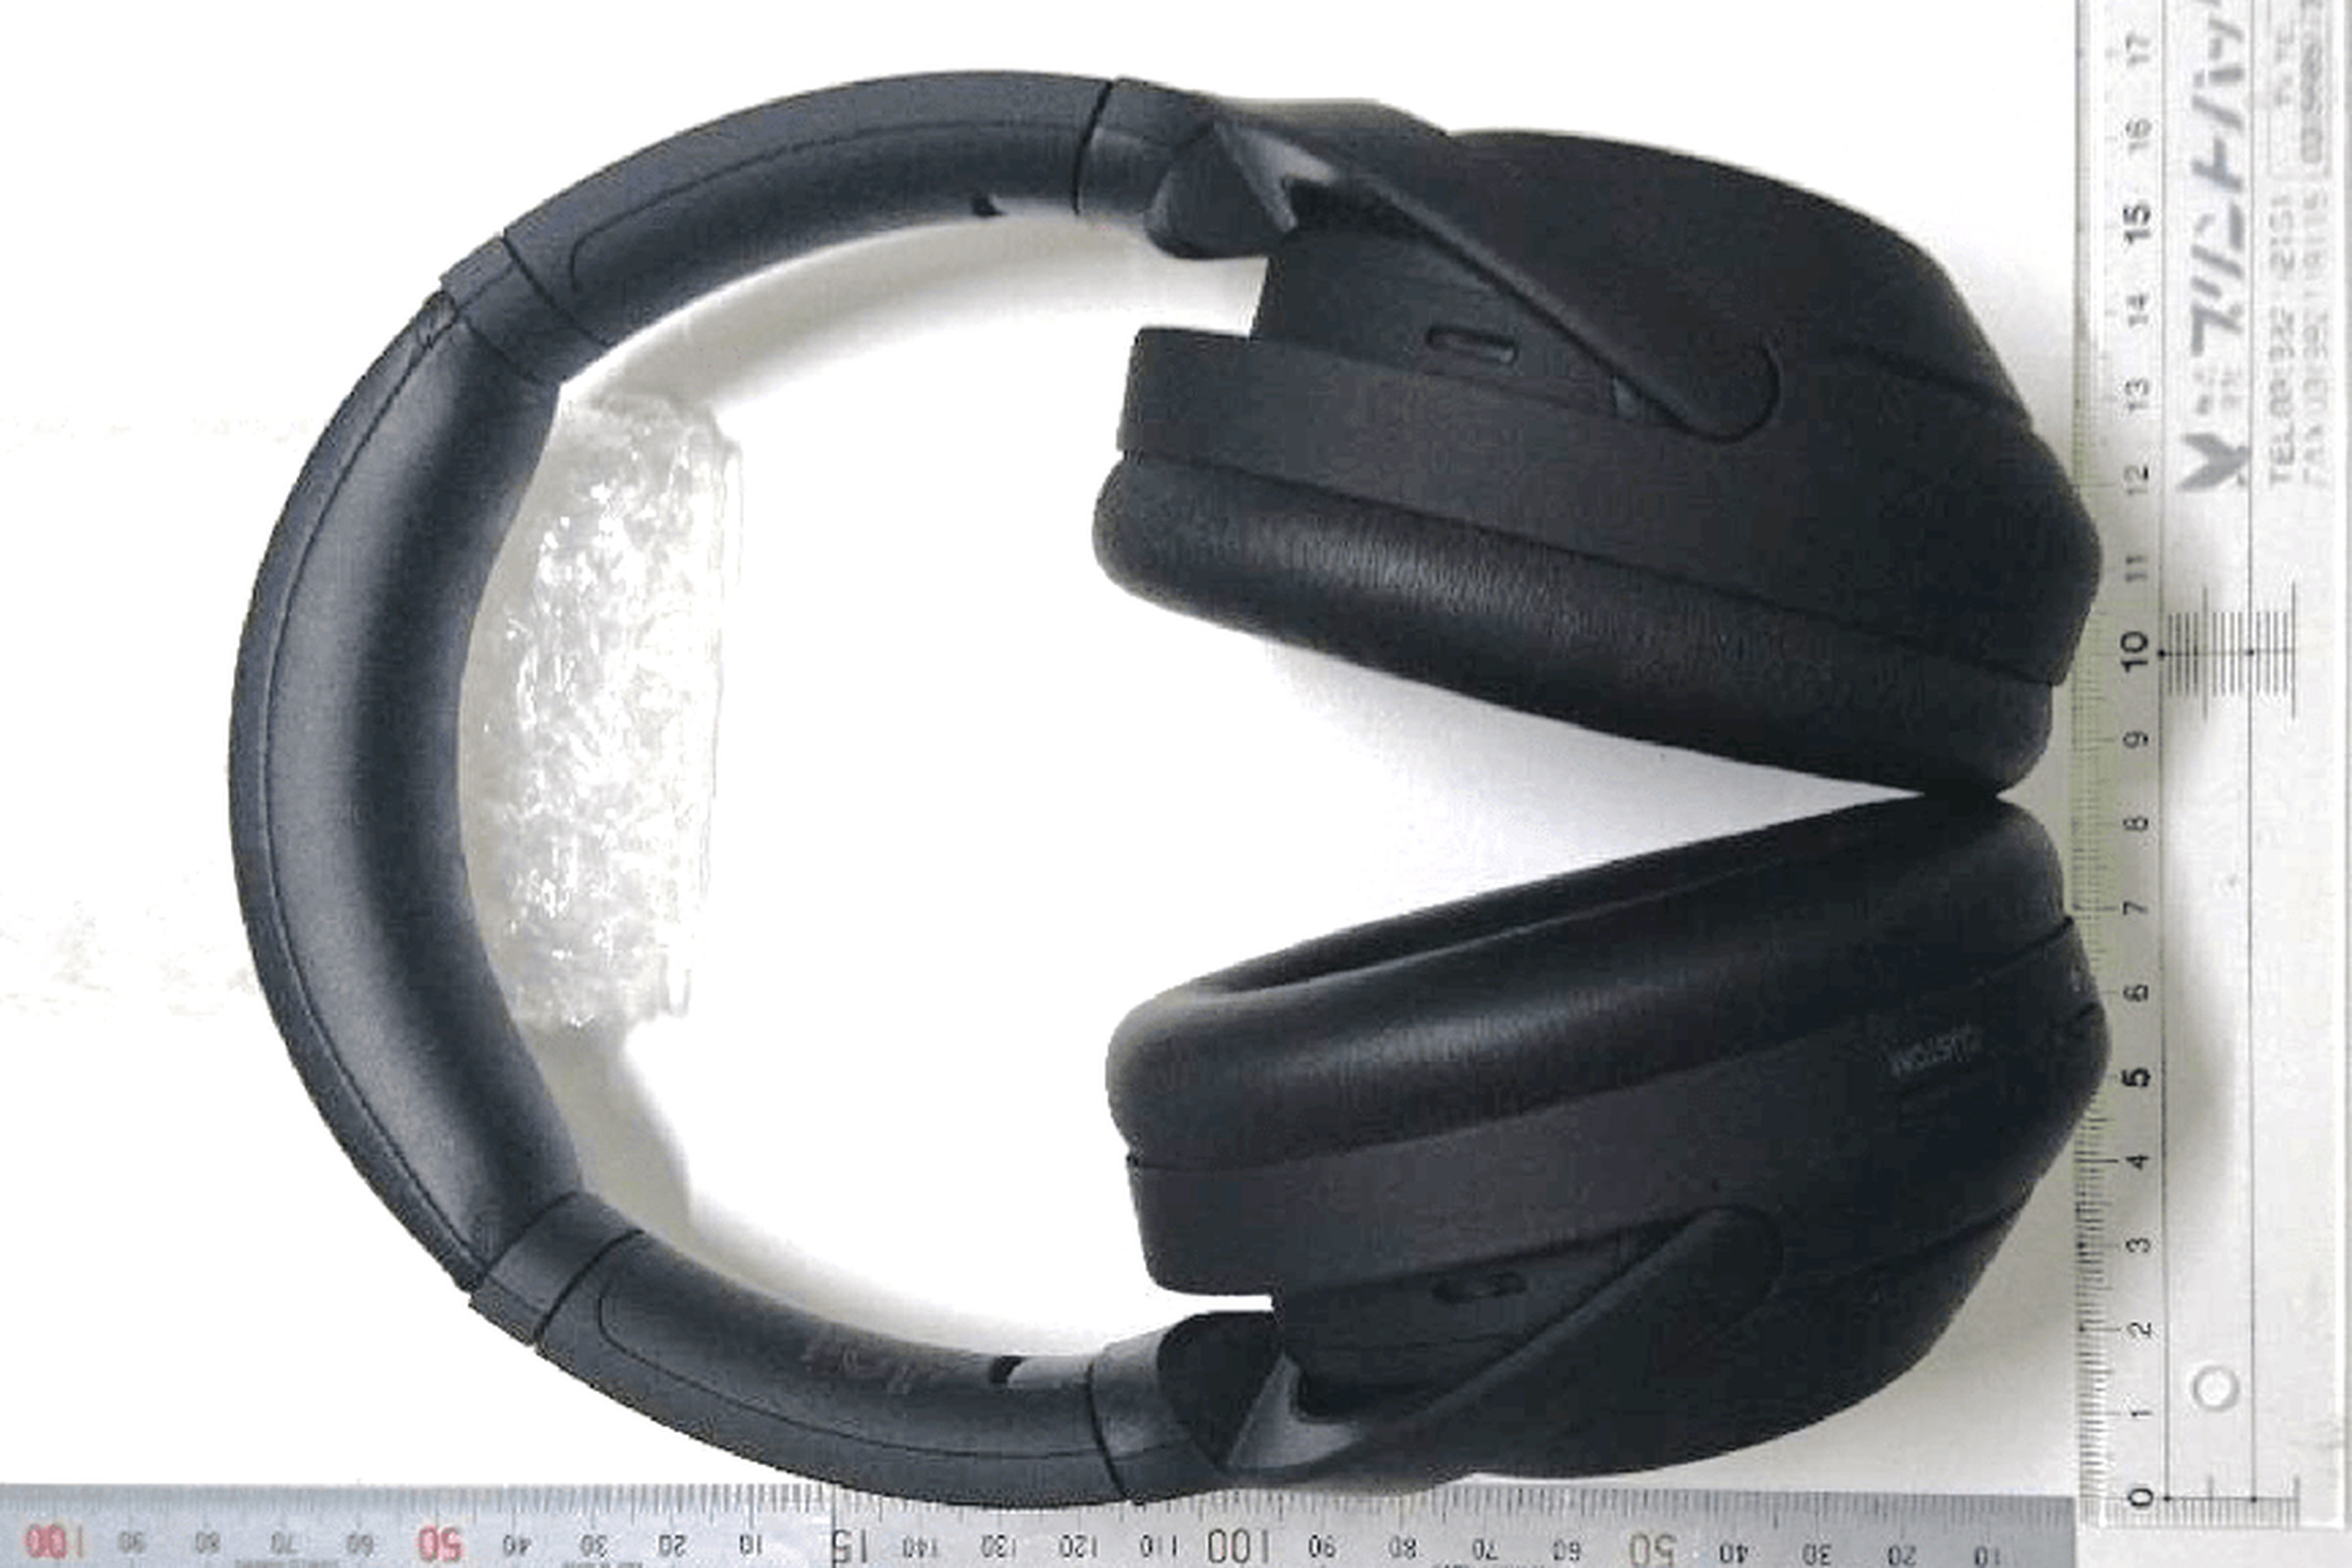 Sony’s WH-1000XM4 wireless noise-canceling headphones.